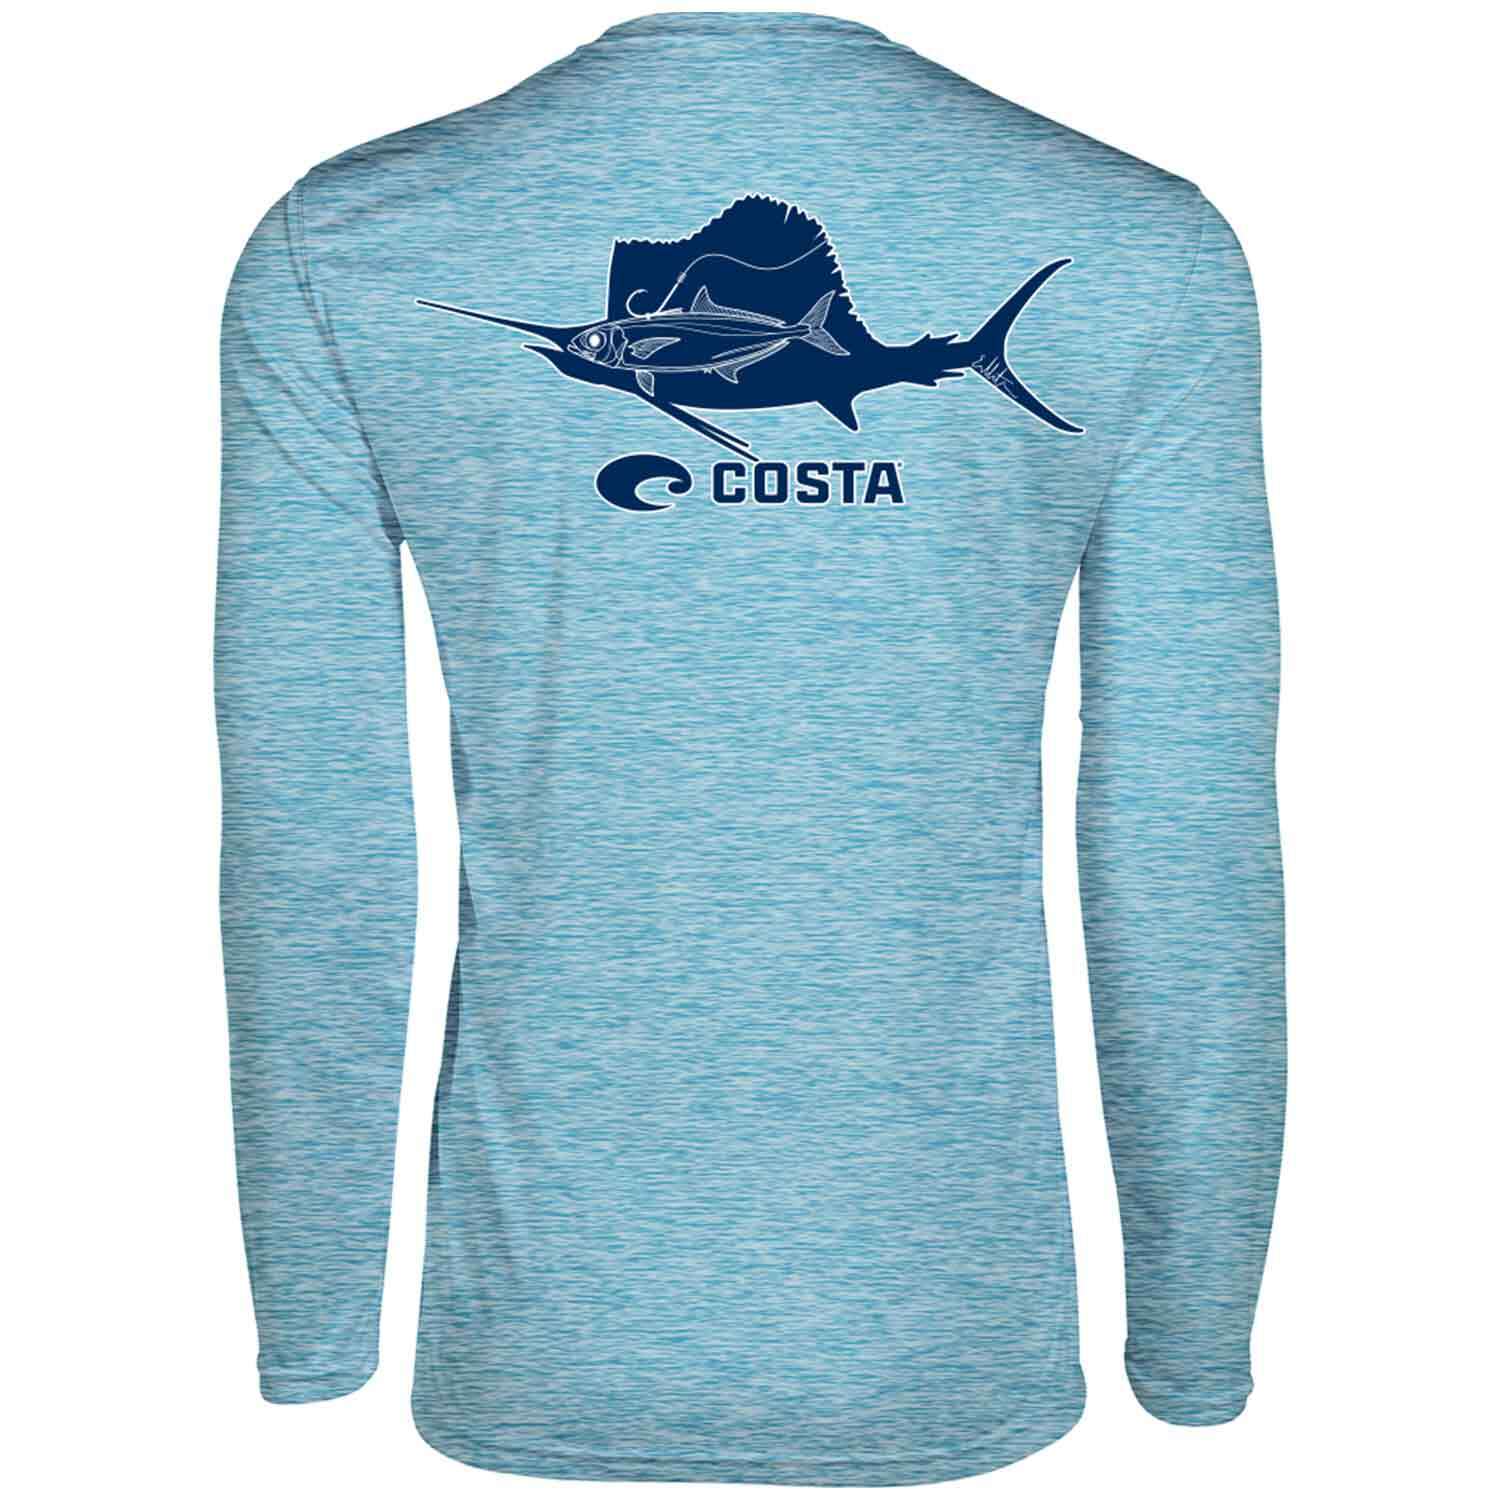 Costa Technical Catonic Crew Long Sleeve Performance Shirt